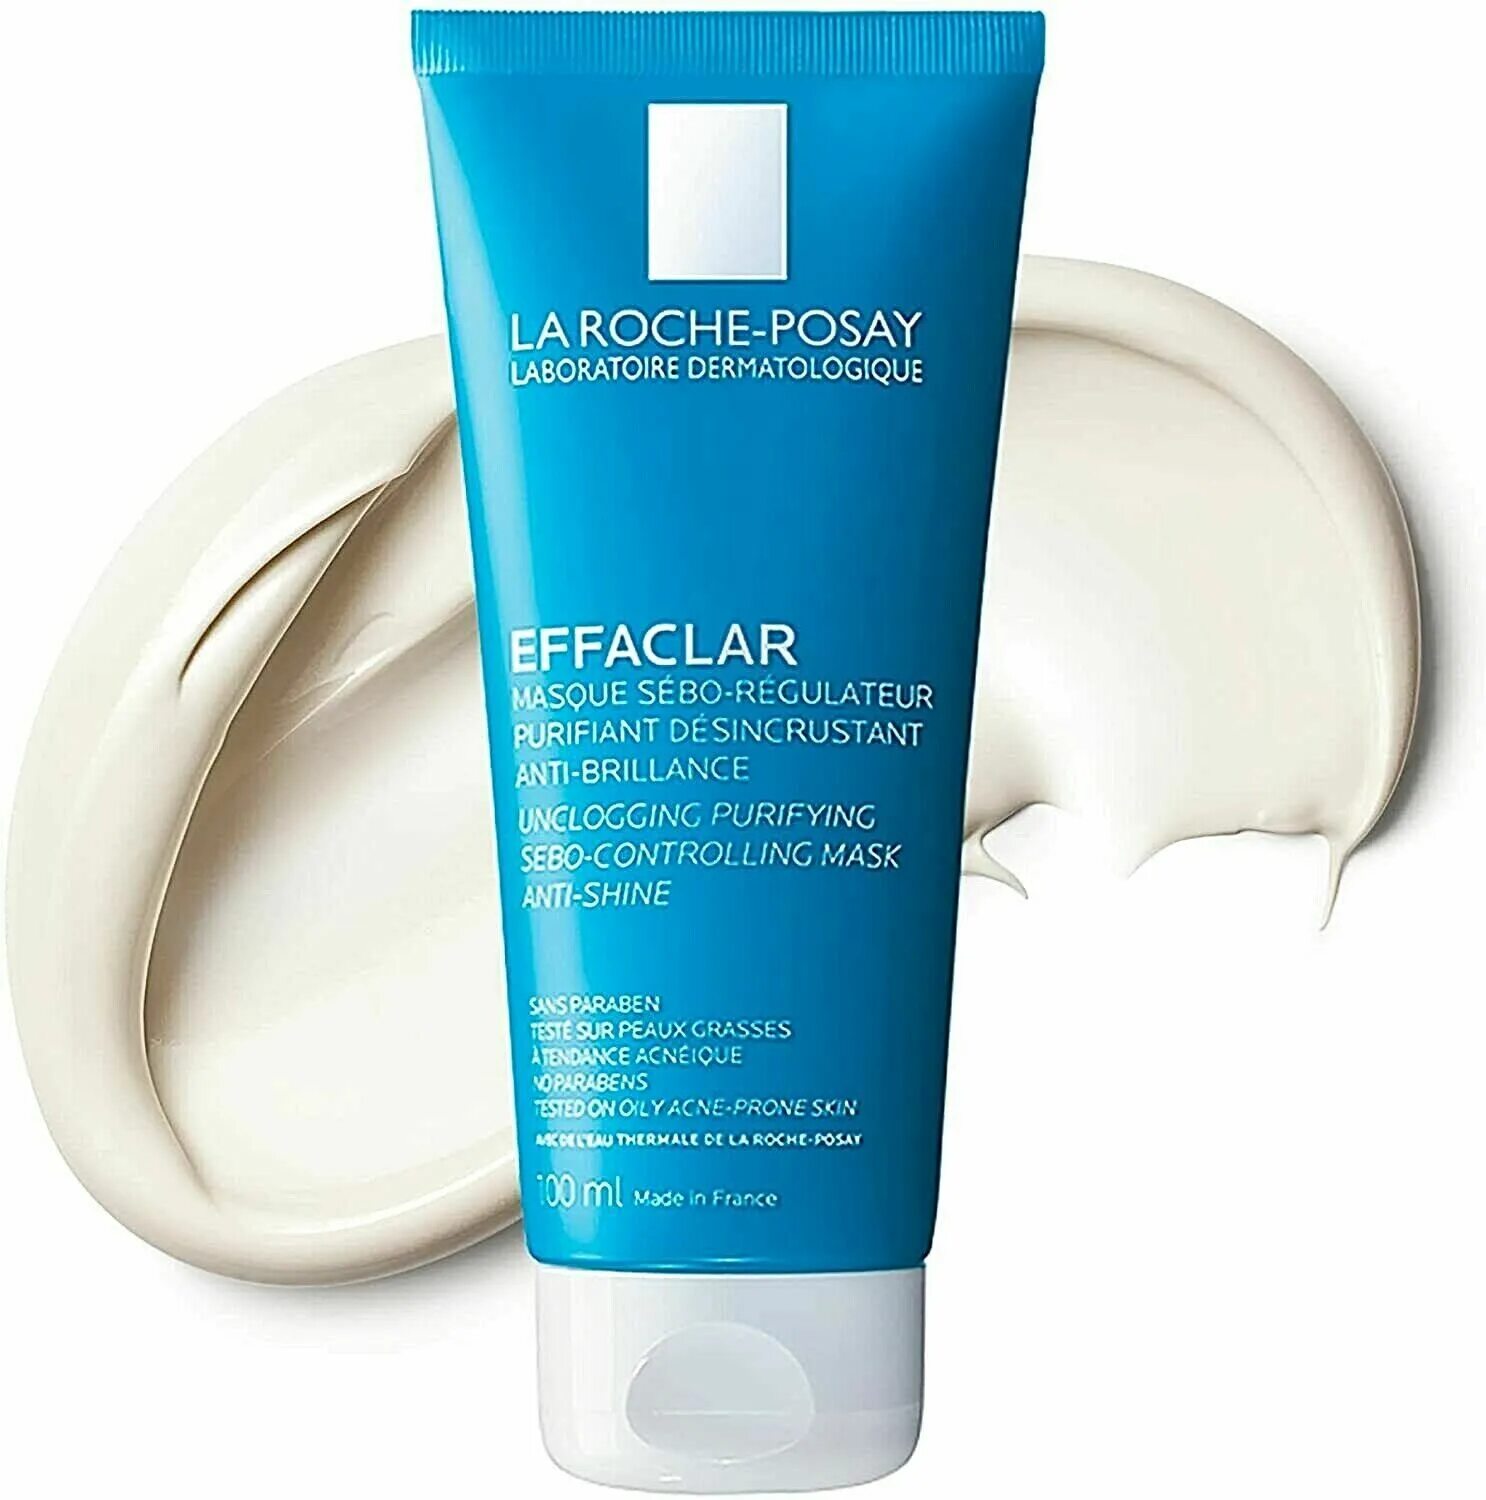 Foaming gel cleanser. La Roche Posay Effaclar маска. La Roche Posay Effaclar. La Roche-Posay Effaclar очищающий пенящийся скраб для жирной кожи 400 мл. Sebo-Almond-Claris бактериостатическое очищающее средство.